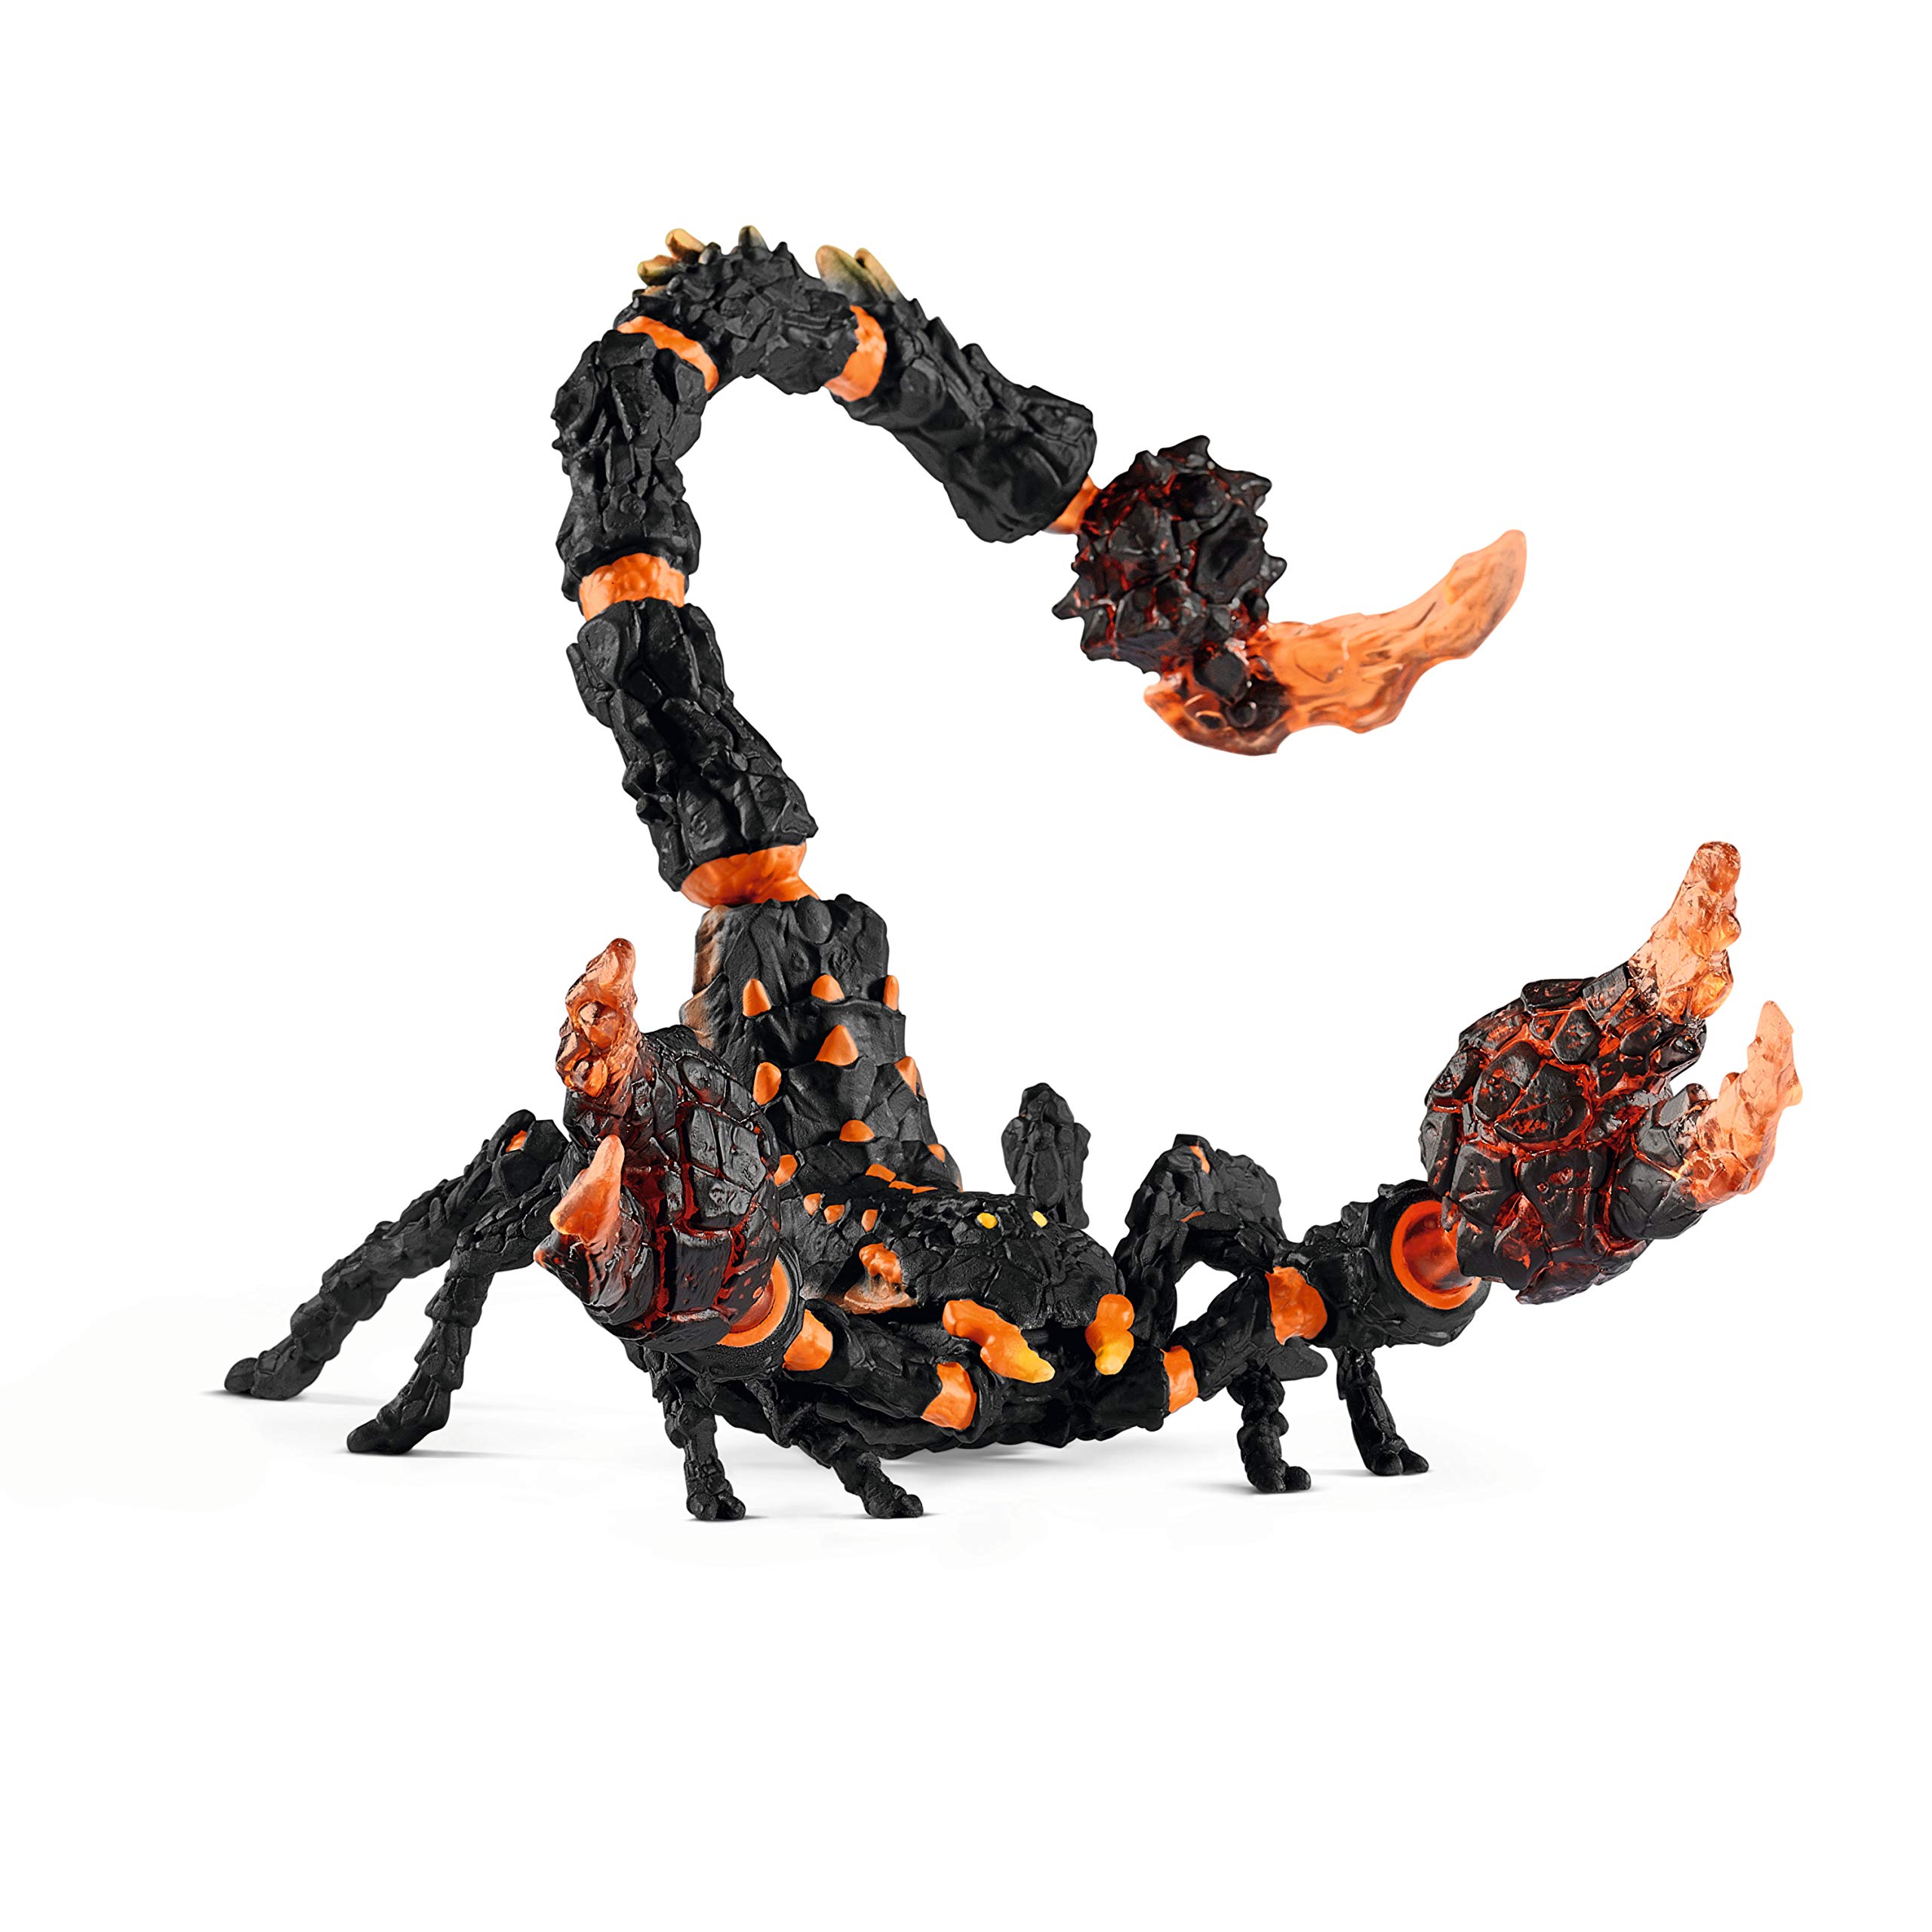 Schleich Eldrador Creatures Lava Scorpion Action Figure Toy for Kids Ages 7-12 Multicoloured, 20.5 x 13.5 x 14 cm